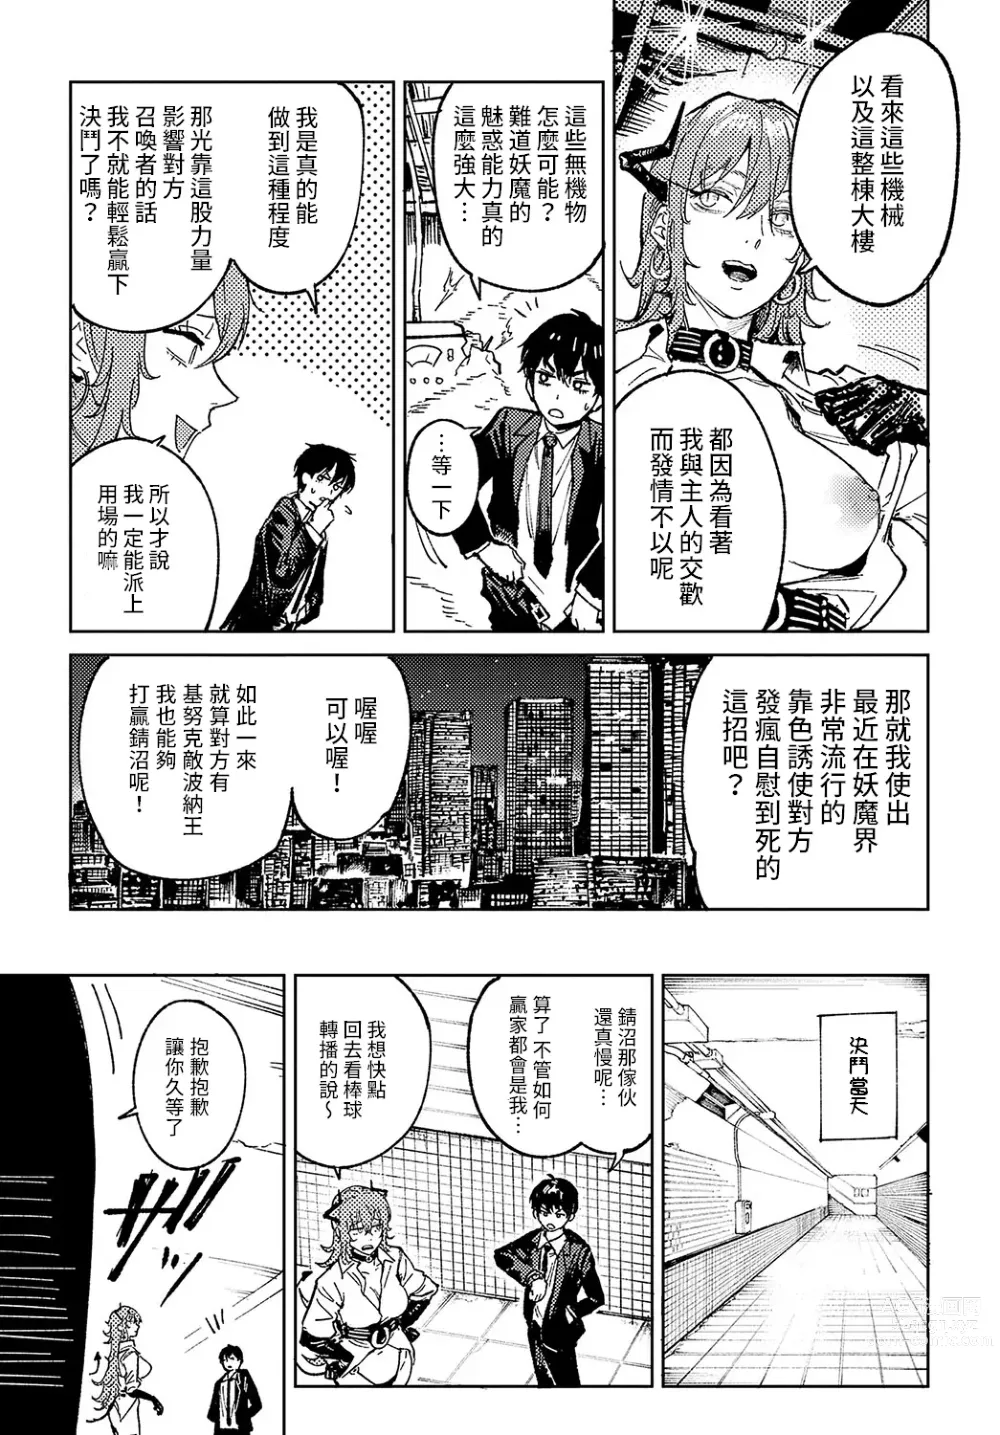 Page 21 of manga Youran Makou